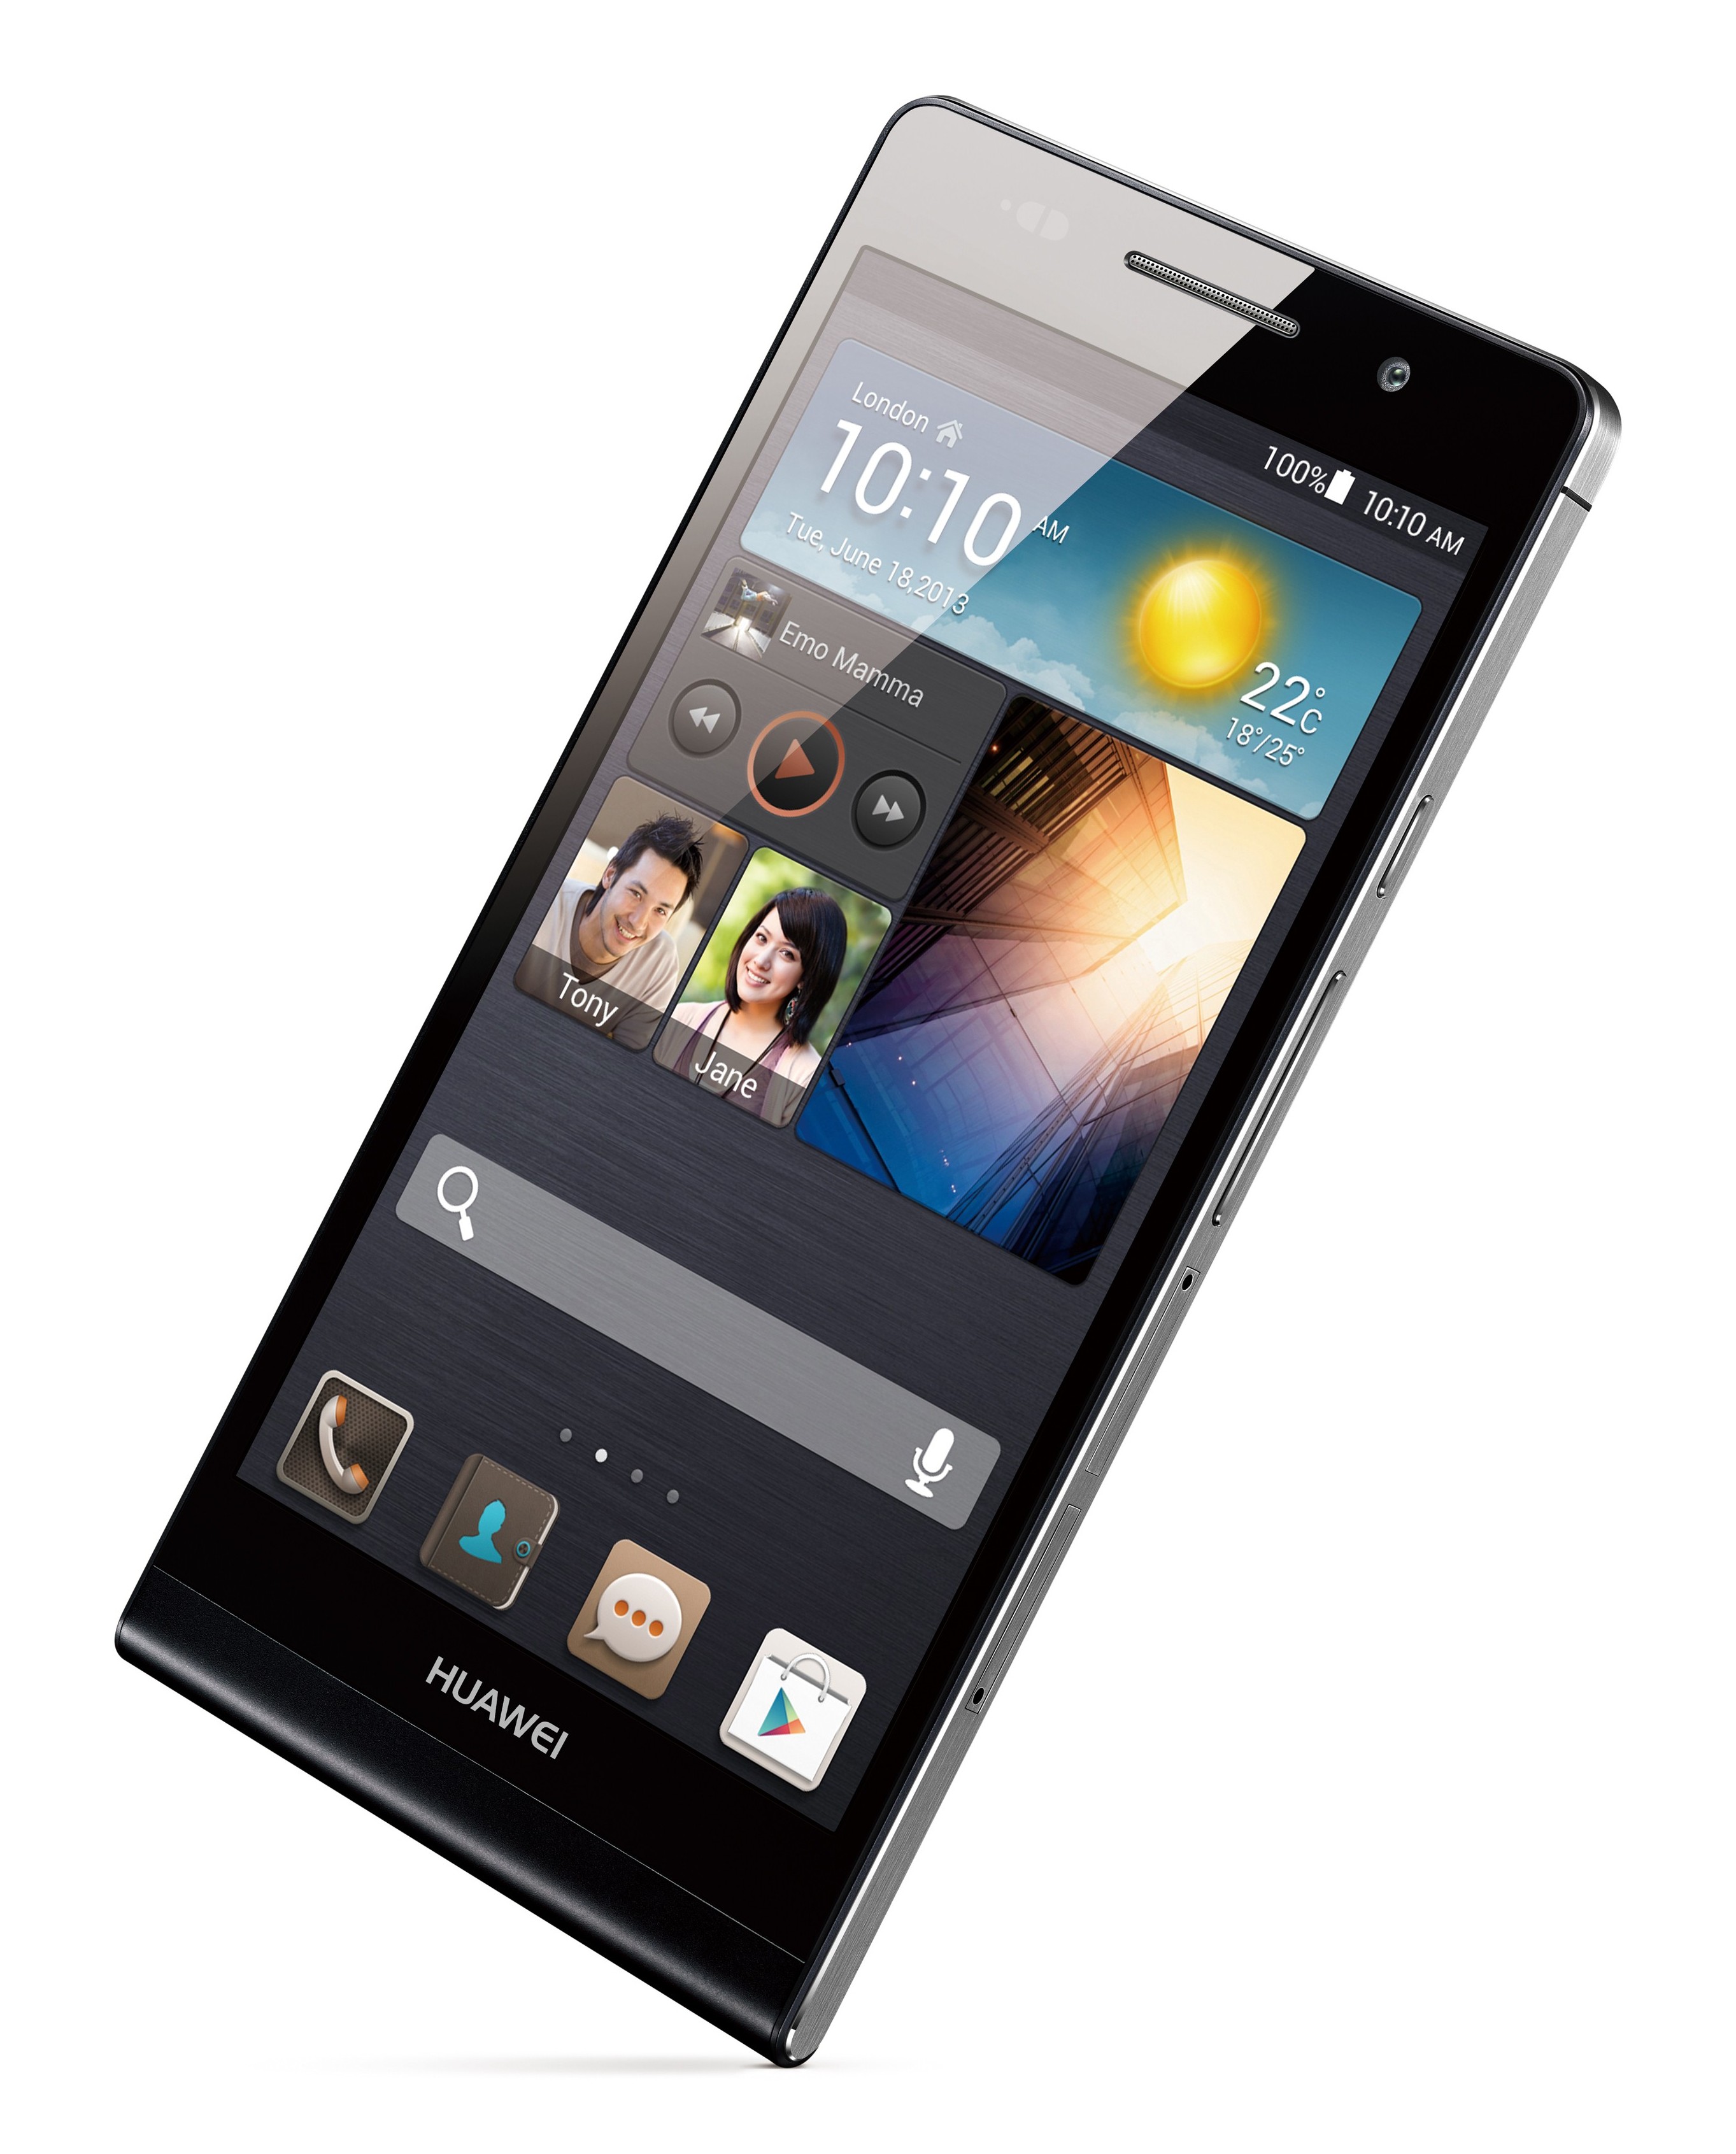 Huawei-Ascend-P6.jpg